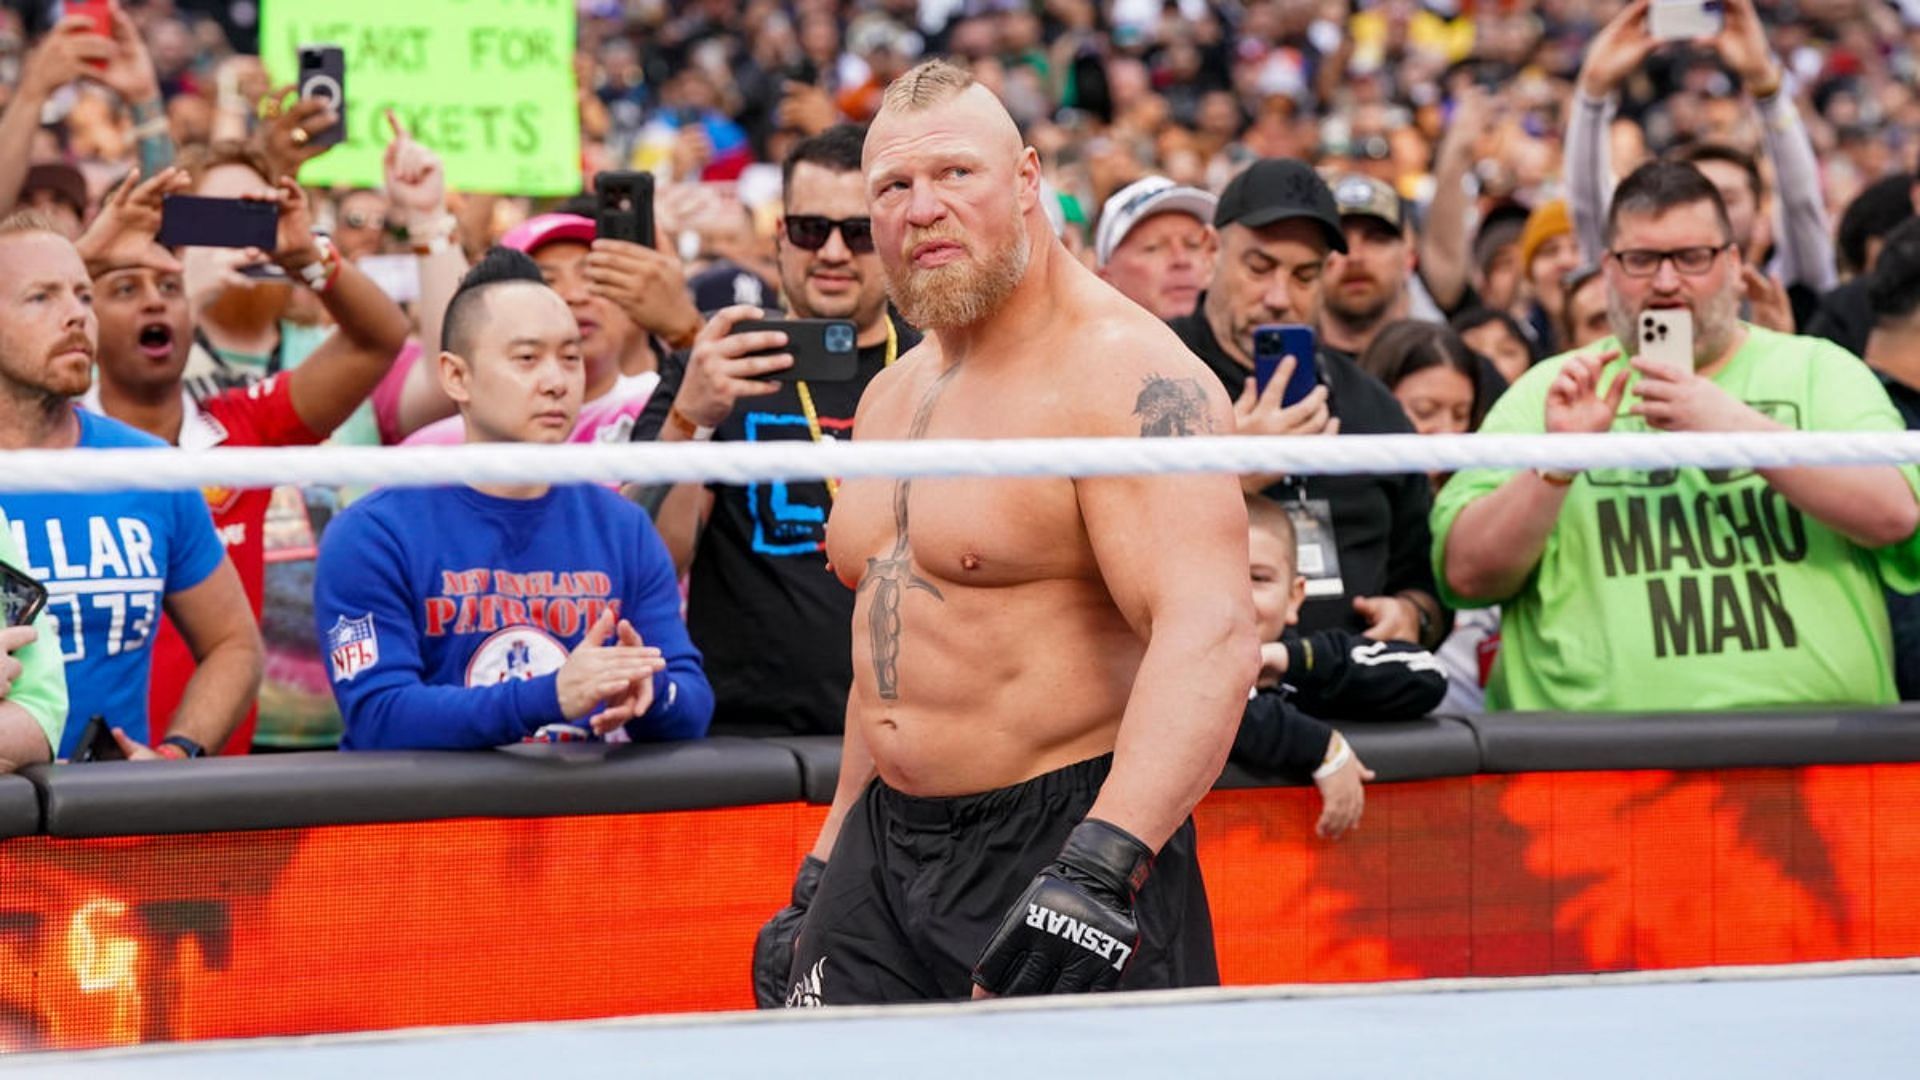 Brock Lesnar before his match at WrestleMania 39. Image Credits: wwe.com